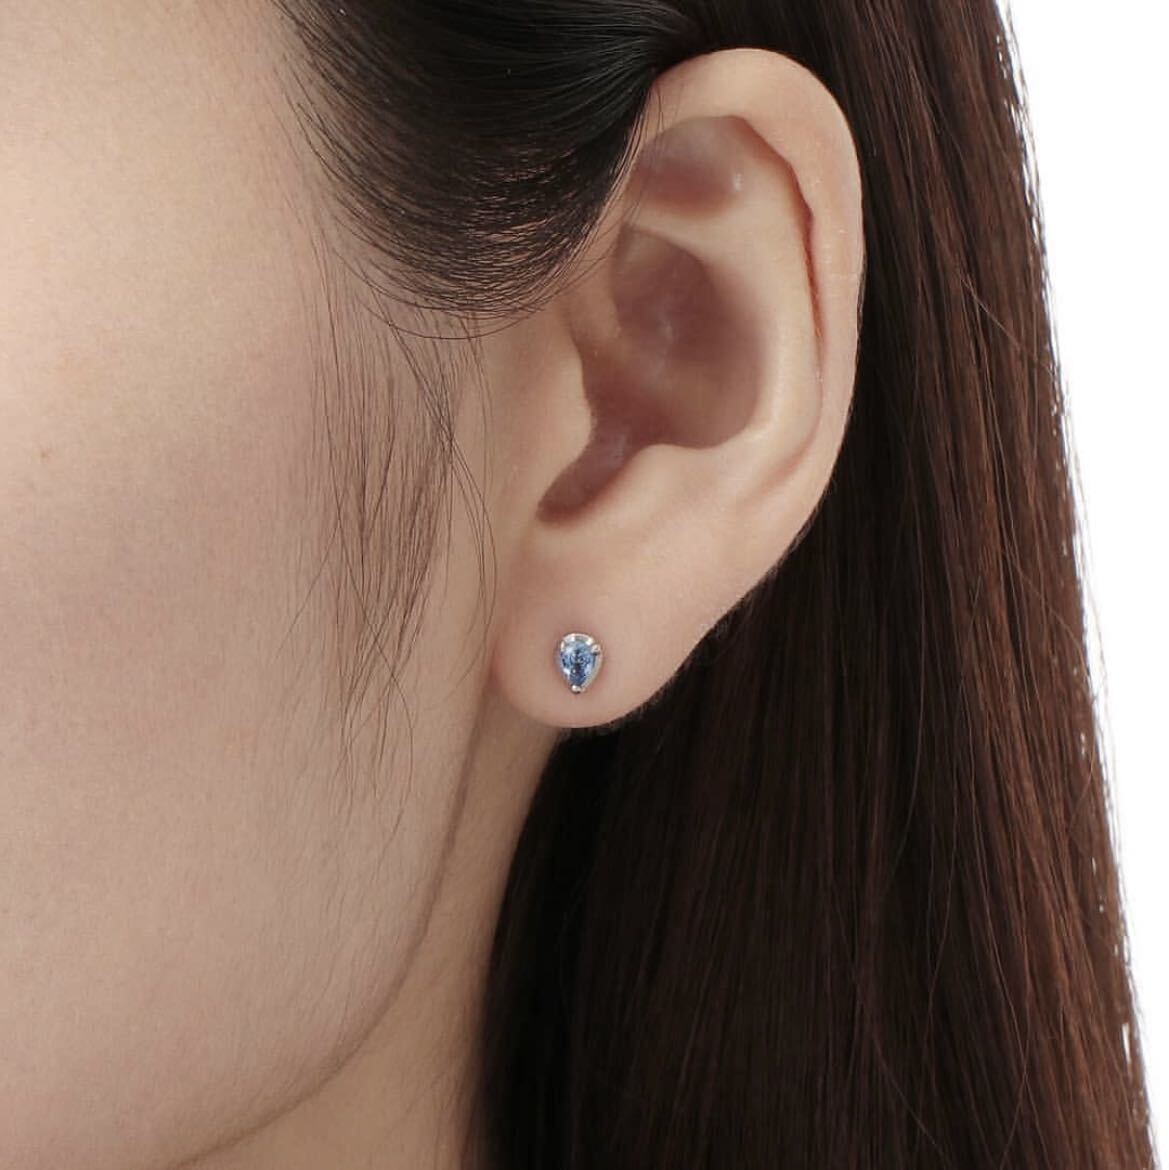  Ponte Vecchio K18WG blue sapphire / diamond earrings 